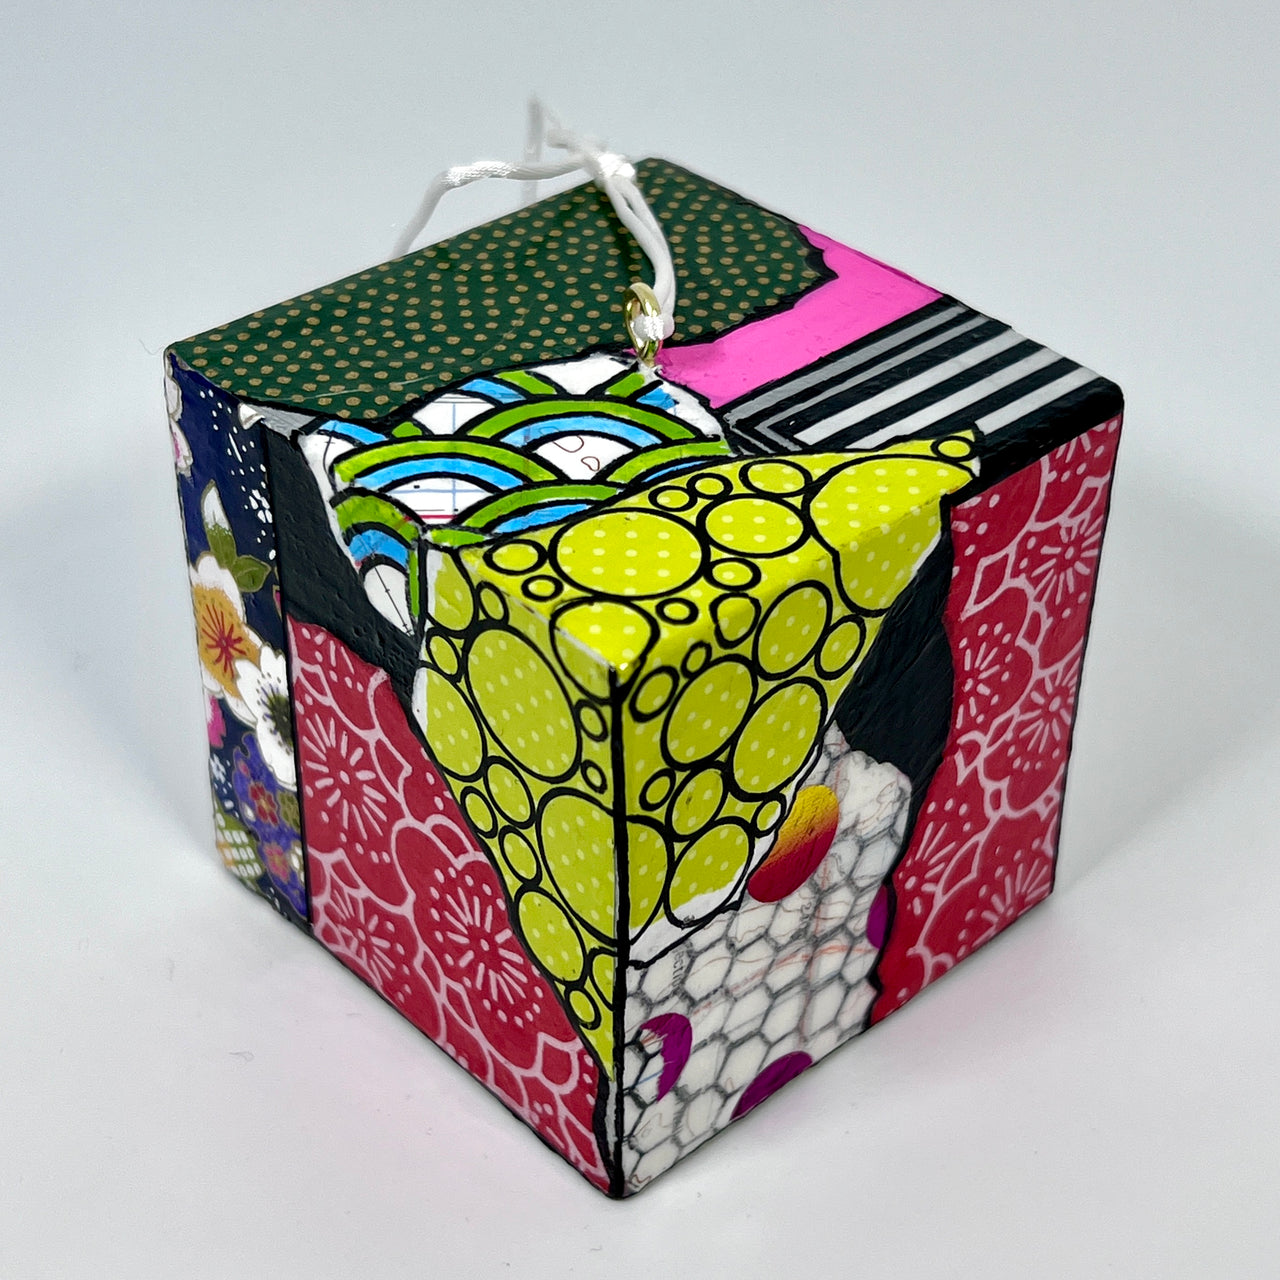 #8 - 3D Cube Art - 2.25" cube